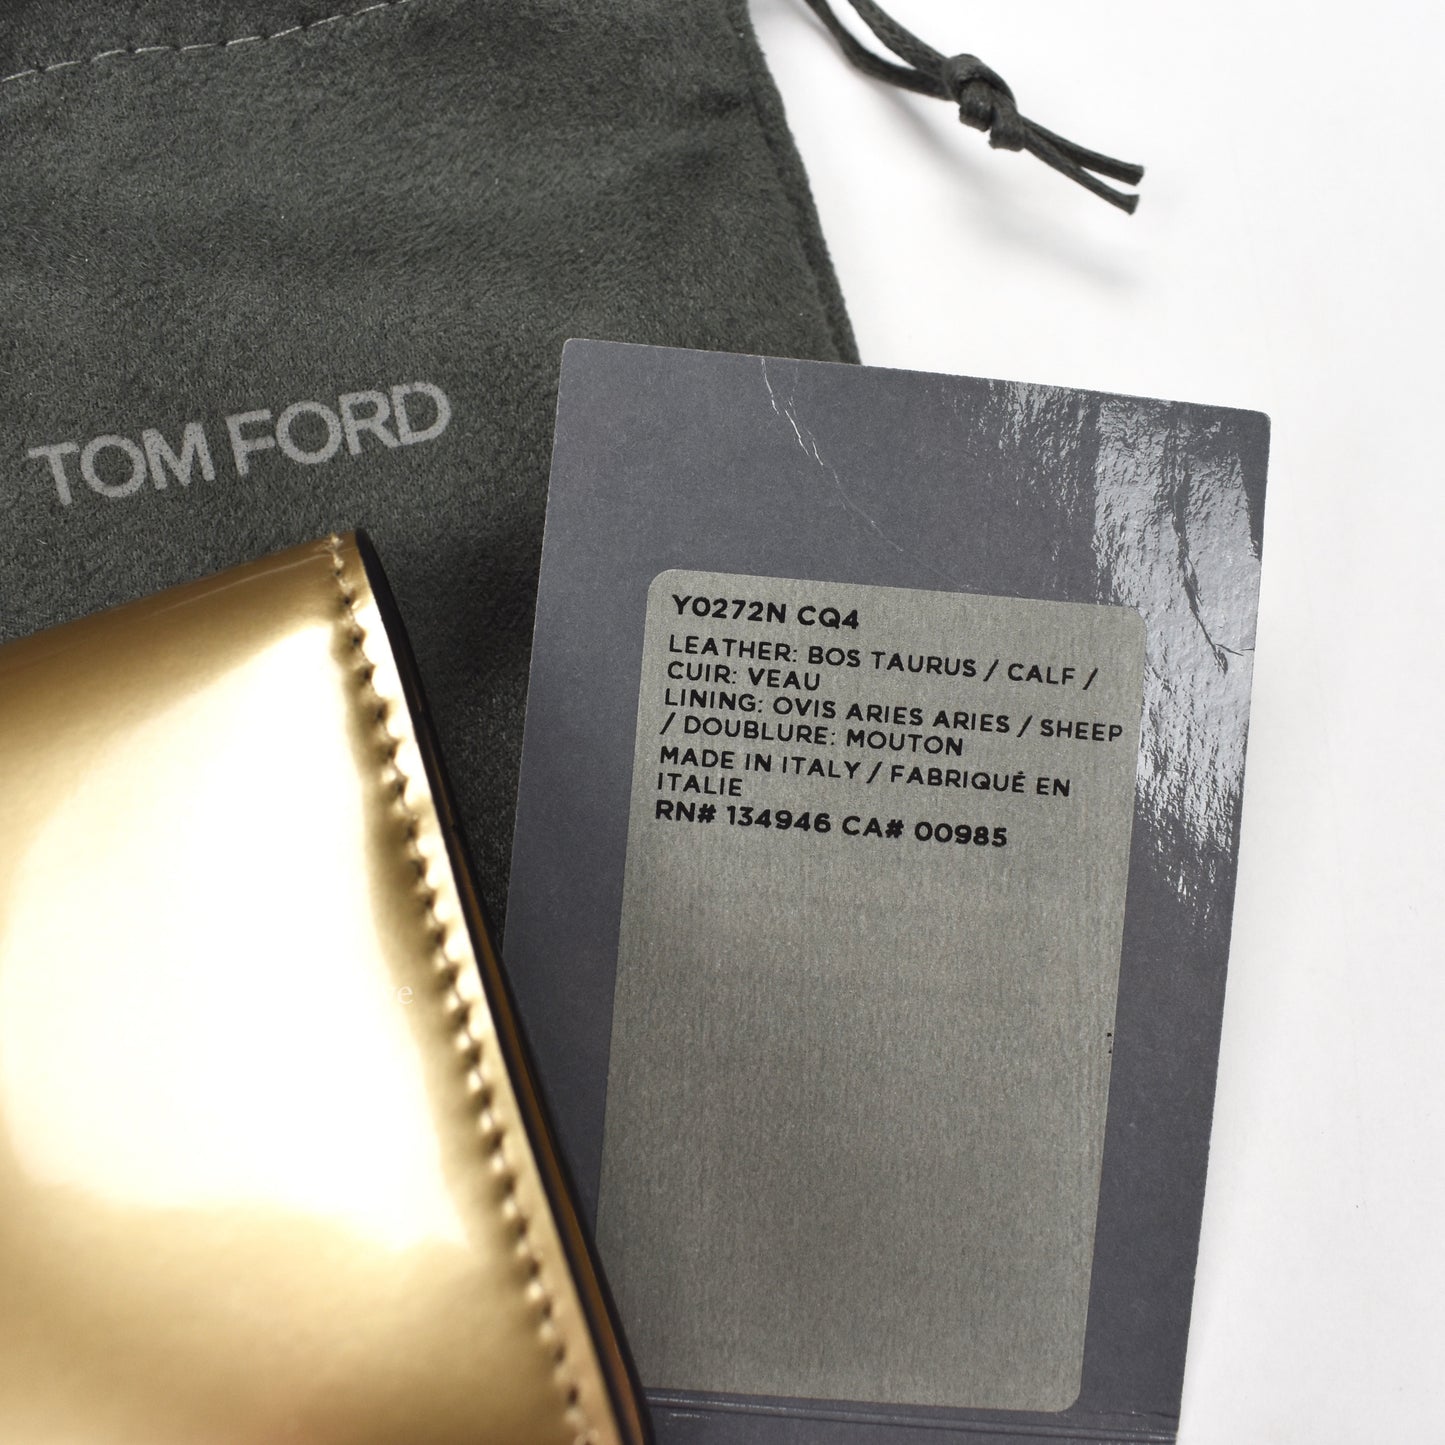 Tom Ford - Metallic Gold Leather Mini Wallet